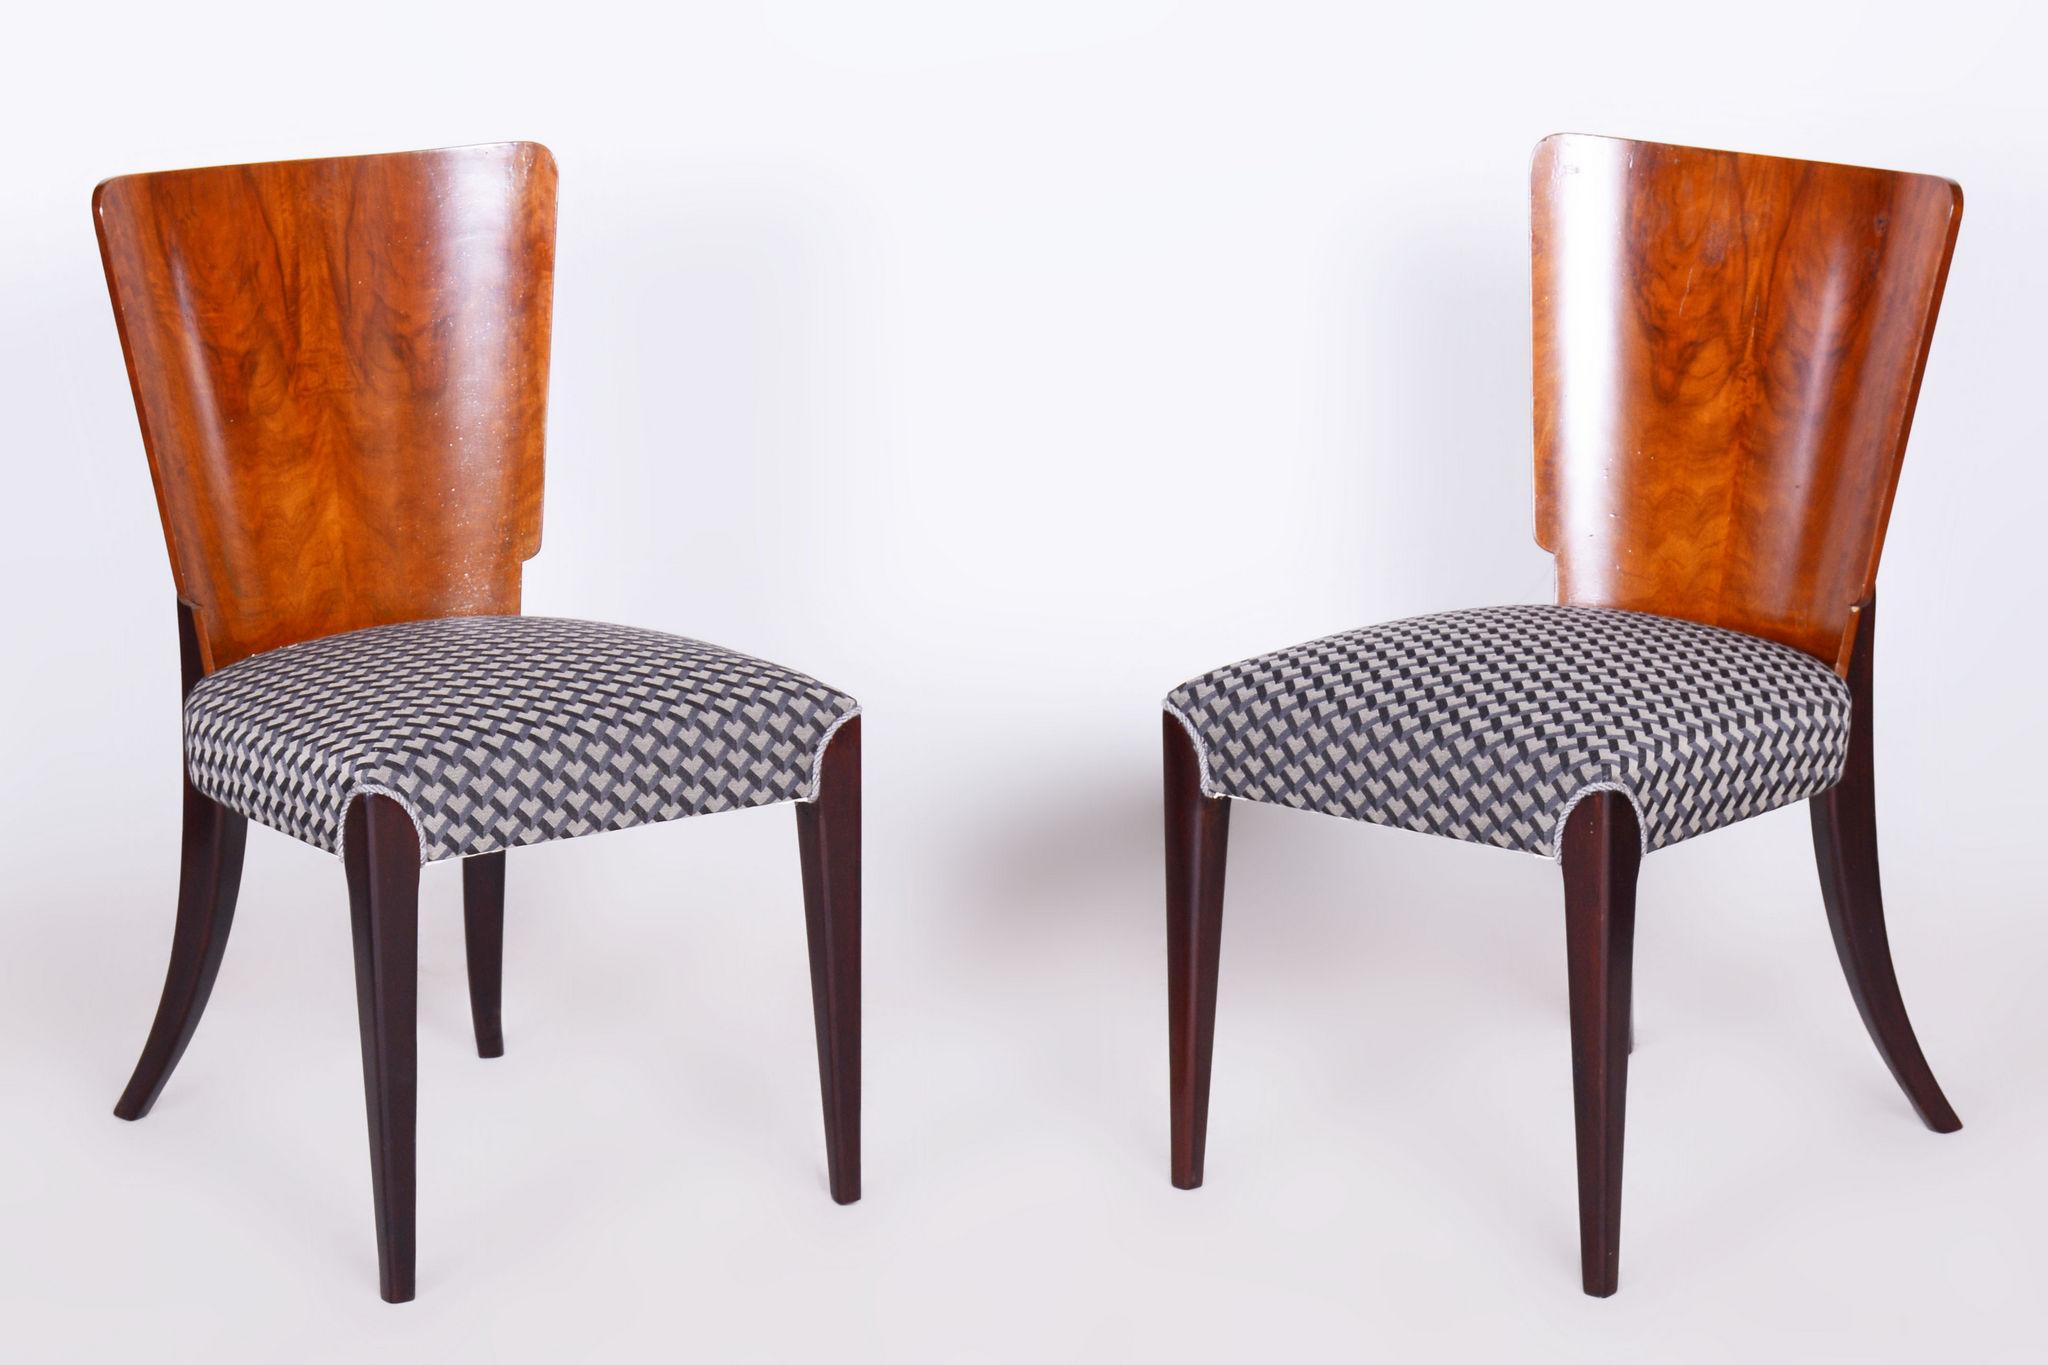 Upholstery Set of Four Restored ArtDeco Chairs, Halabala, UP Zavody, Beech, Czechia, 1930s For Sale